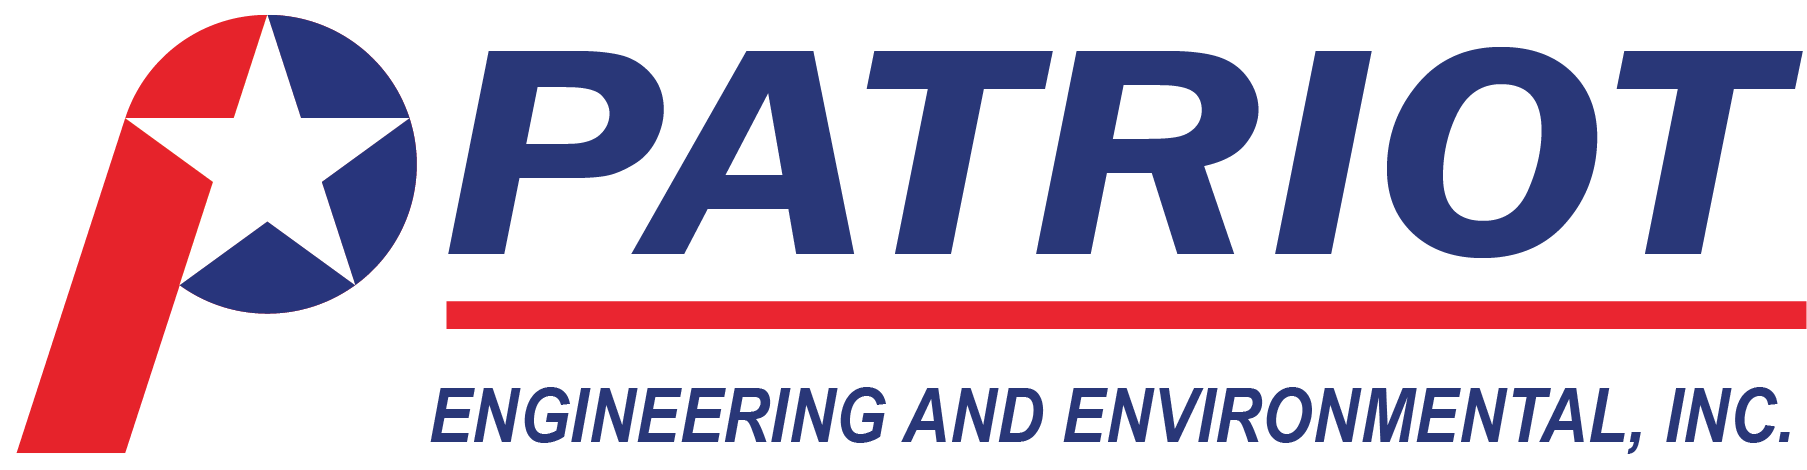 Patriot Engineering and environmental inc logo